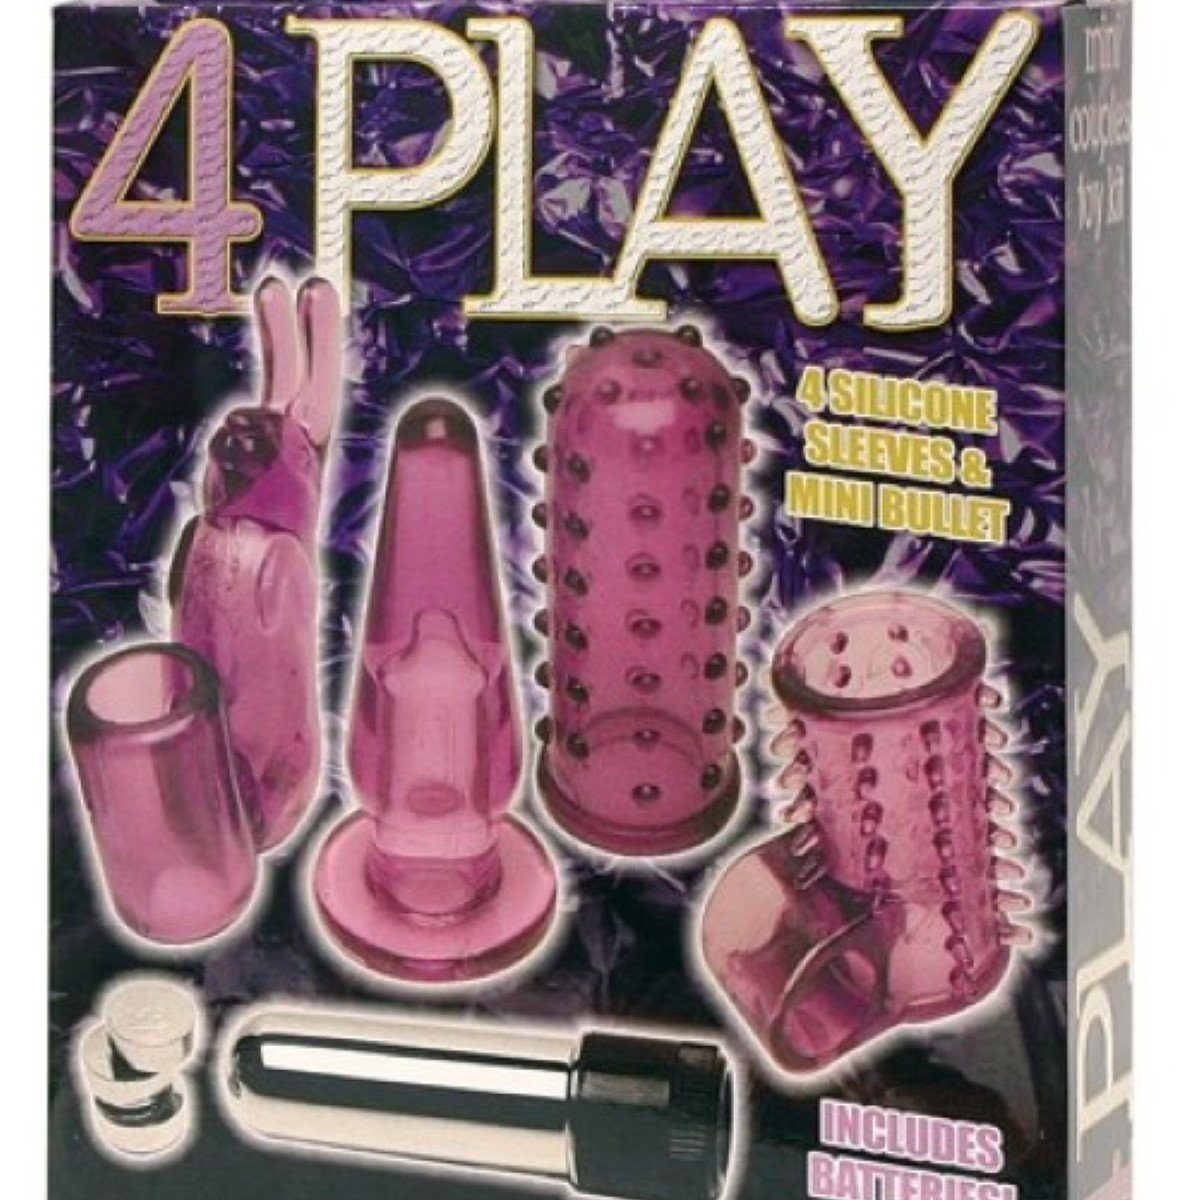 Creations 4Play Mini Seven Couples Erotik-Toy-Set Kit